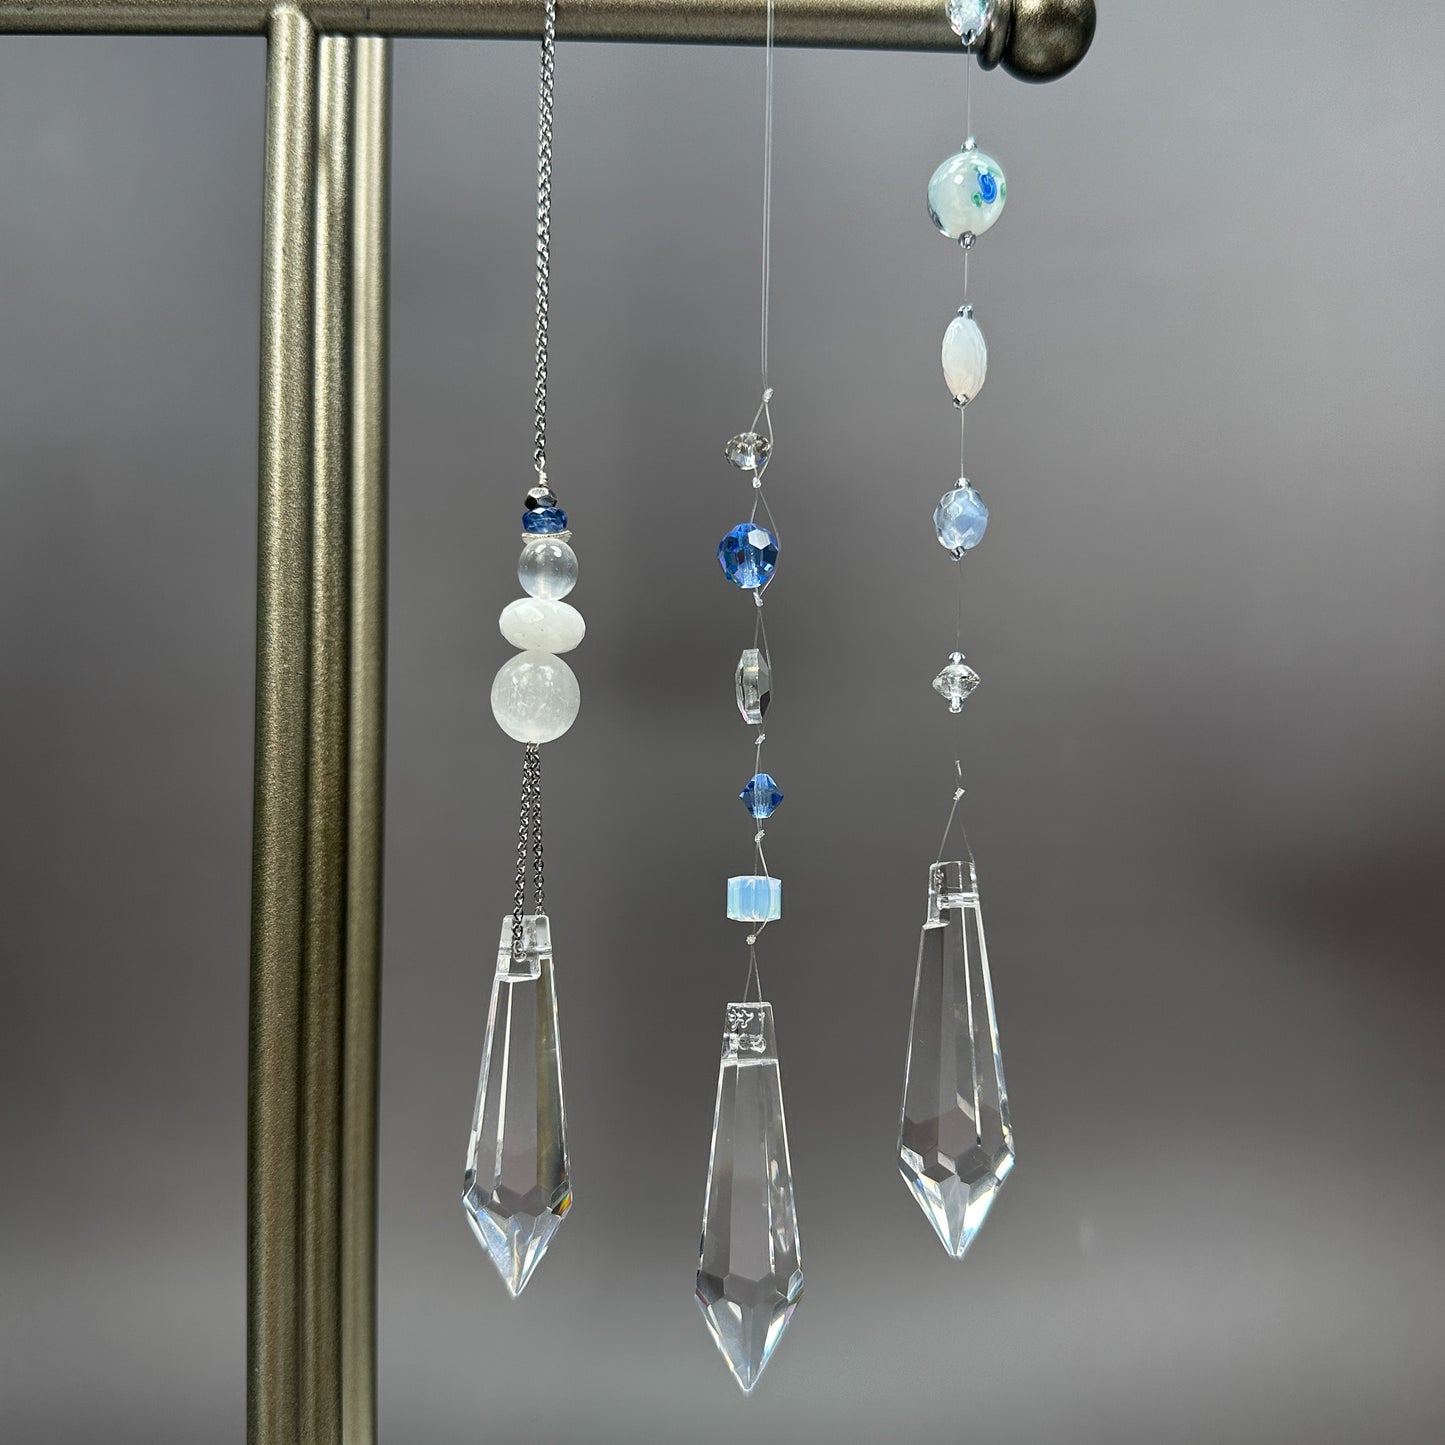 Sparkling Holiday Crystal Ornament / LIghtcatcher Kit - Jason's Style!-The Bead Gallery Honolulu